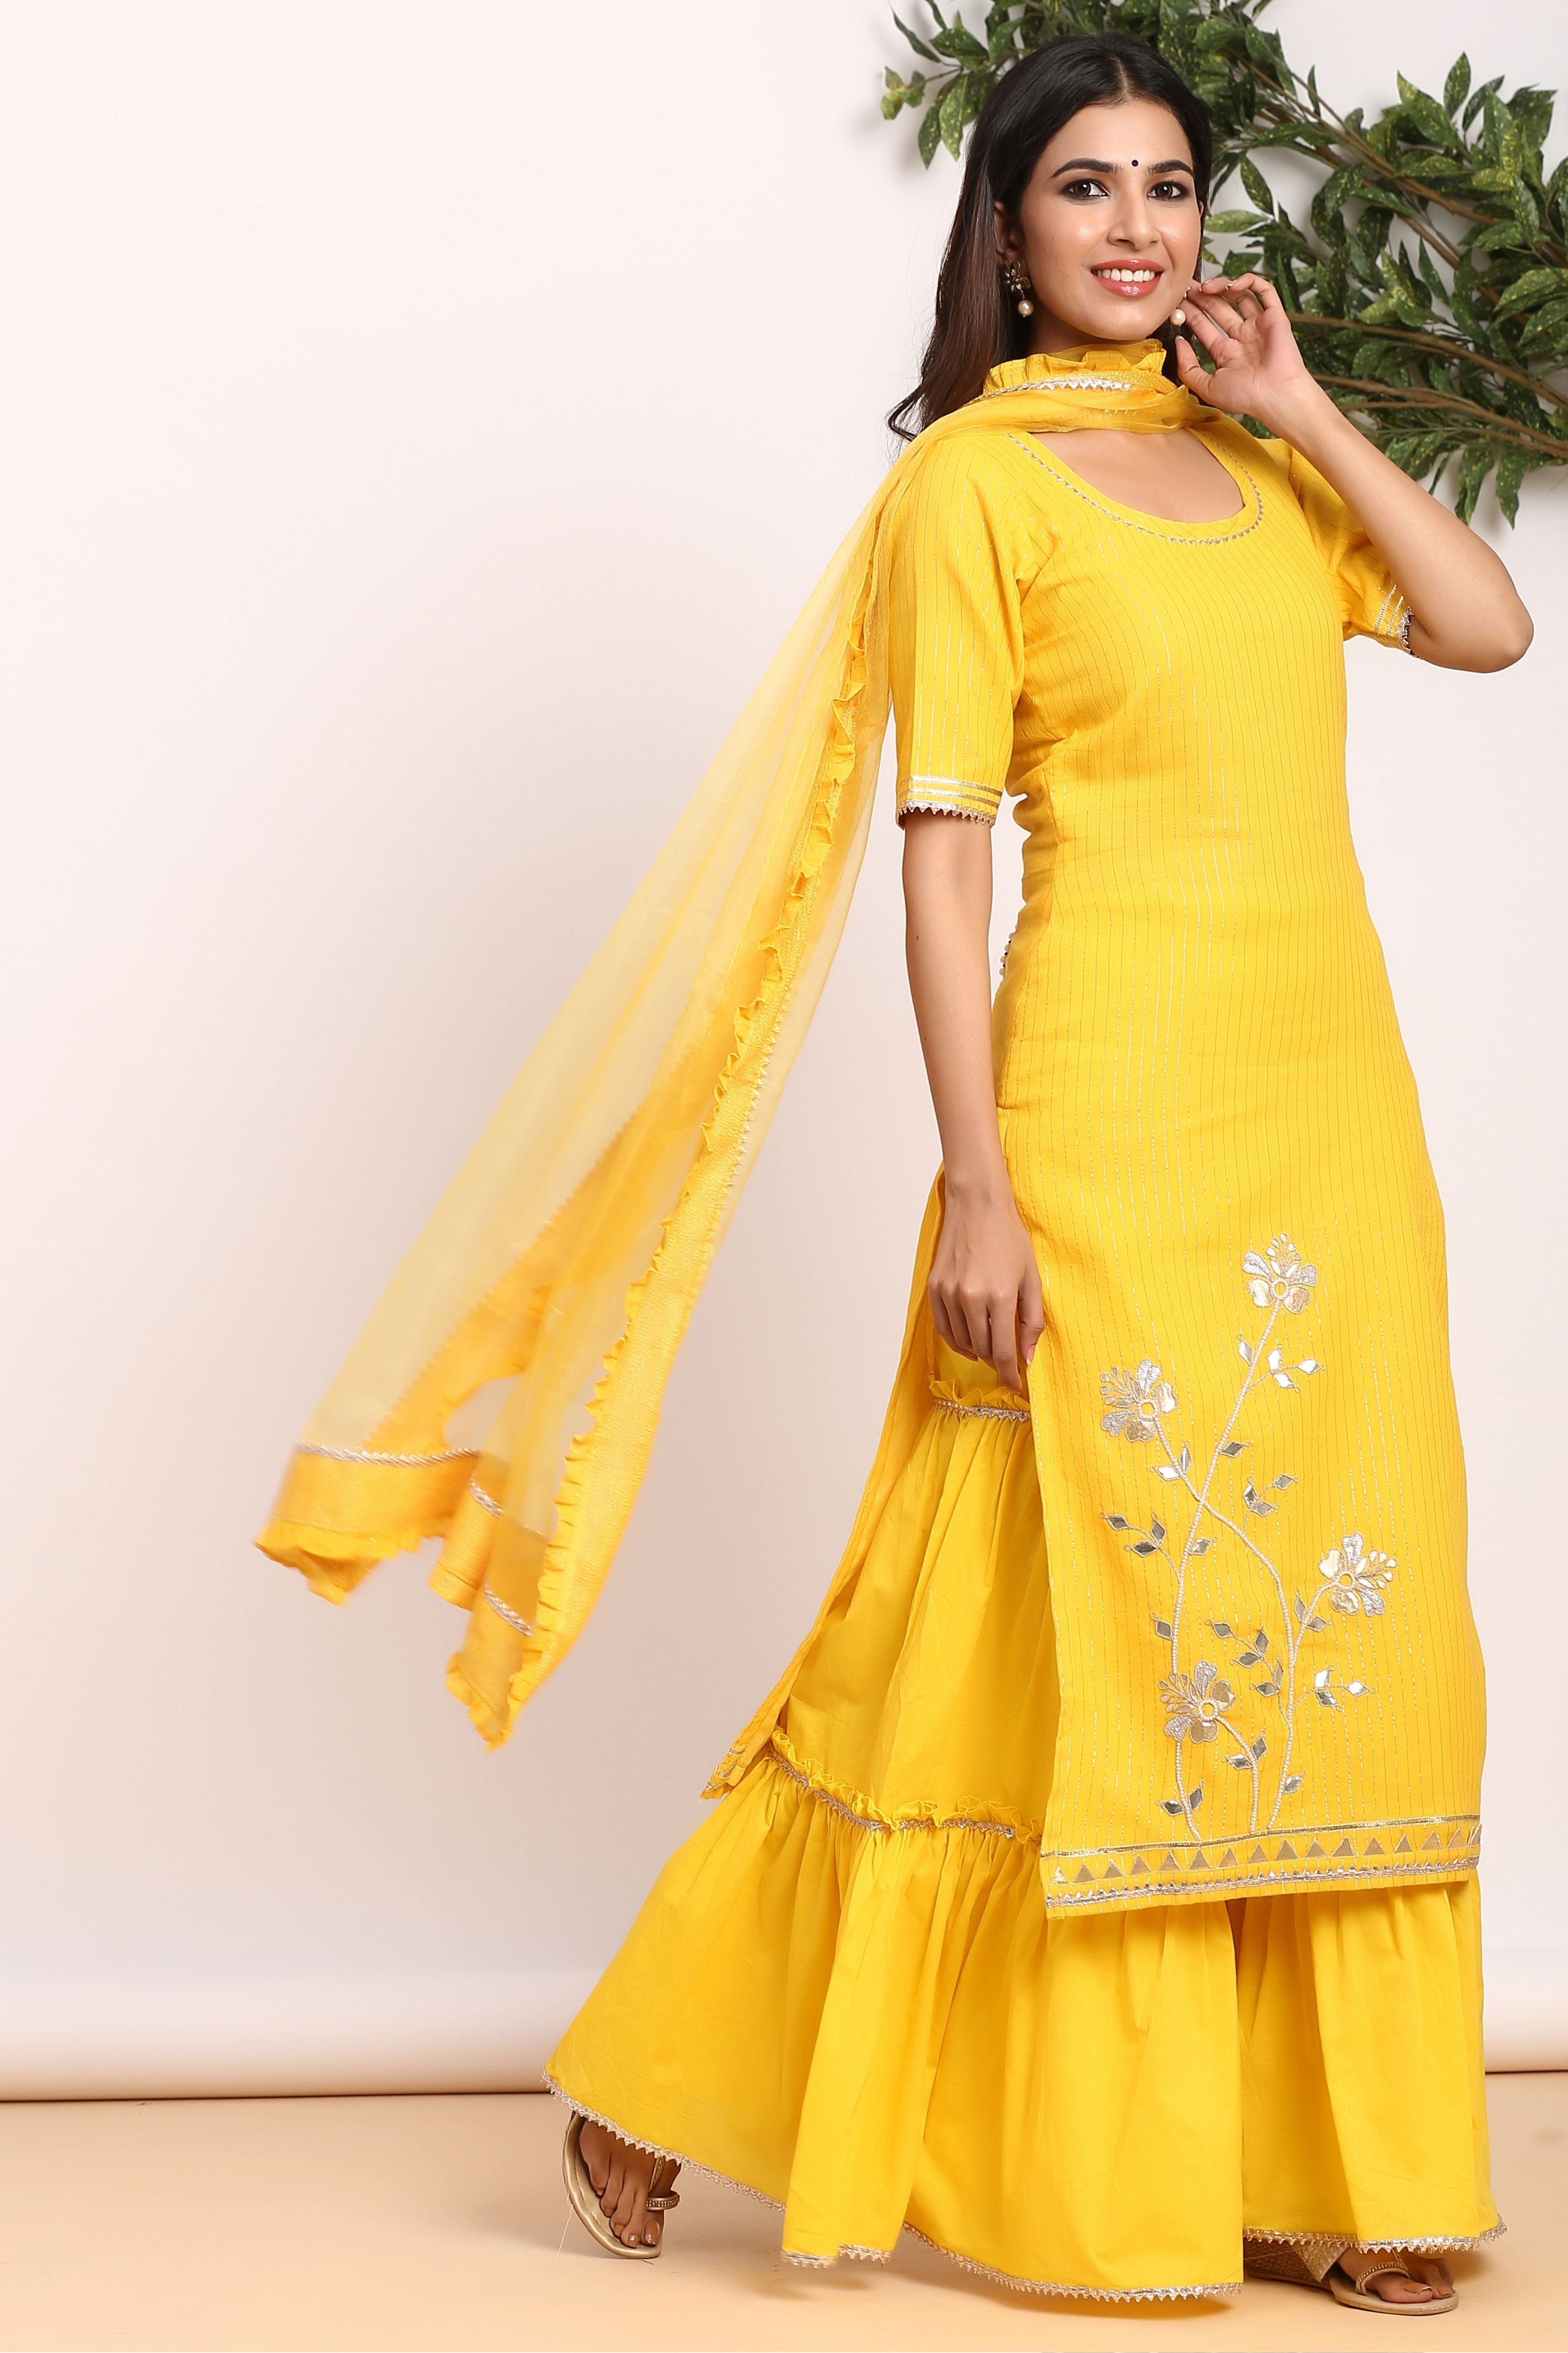 Modern Gharara Sharara Dress in Yellow Colour | Sharara Suits